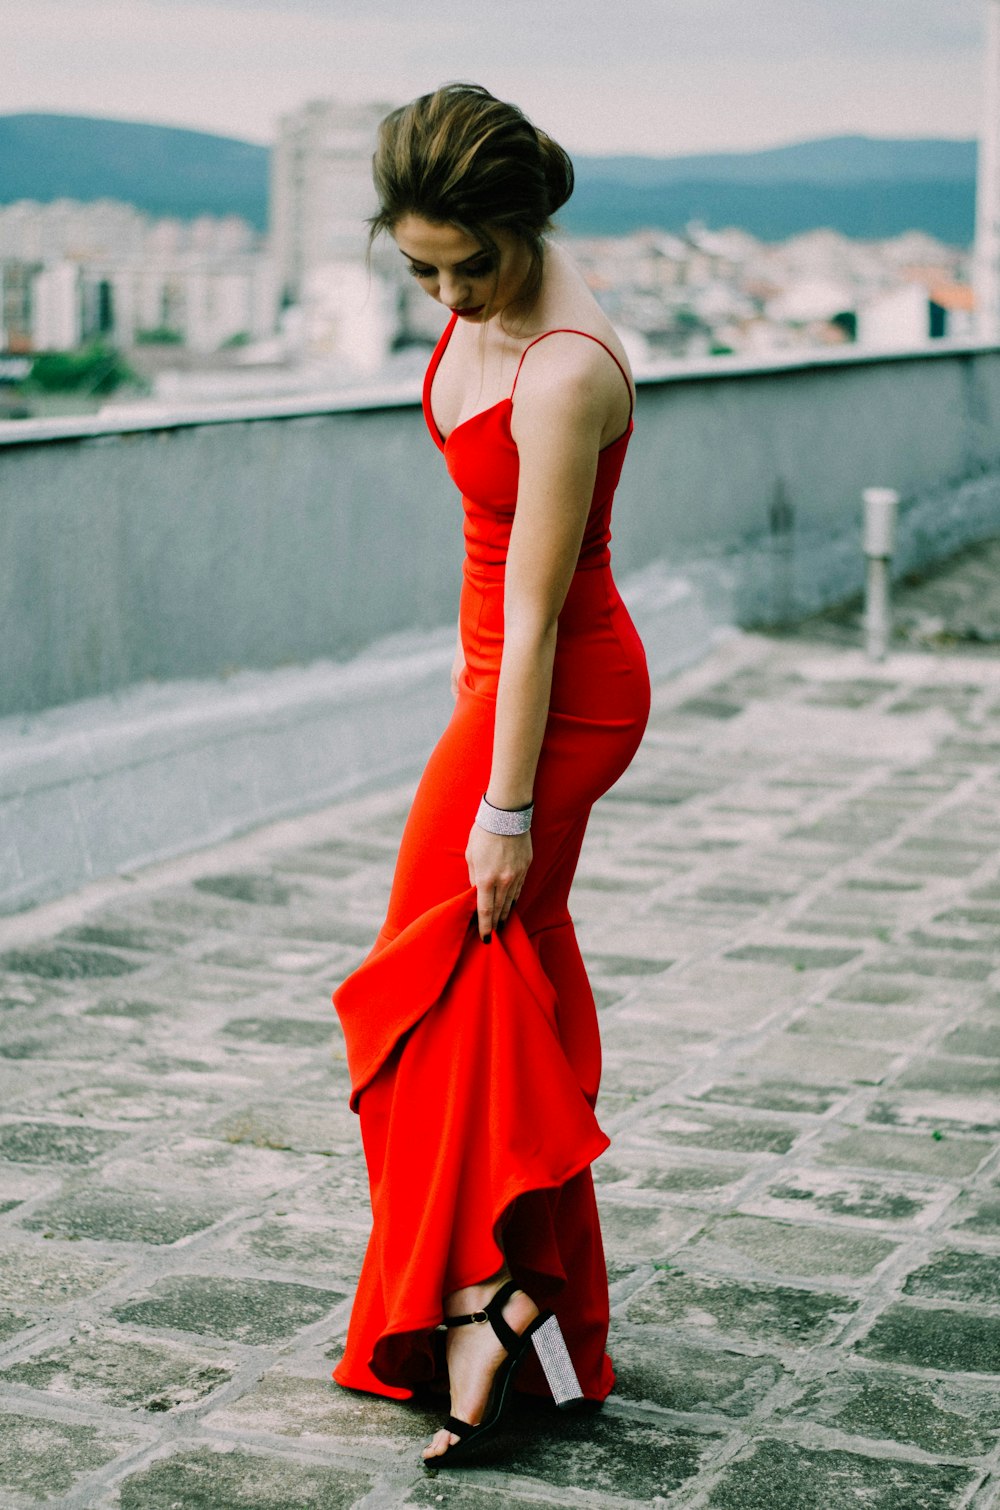 woman wearing red spaghetti strap dress